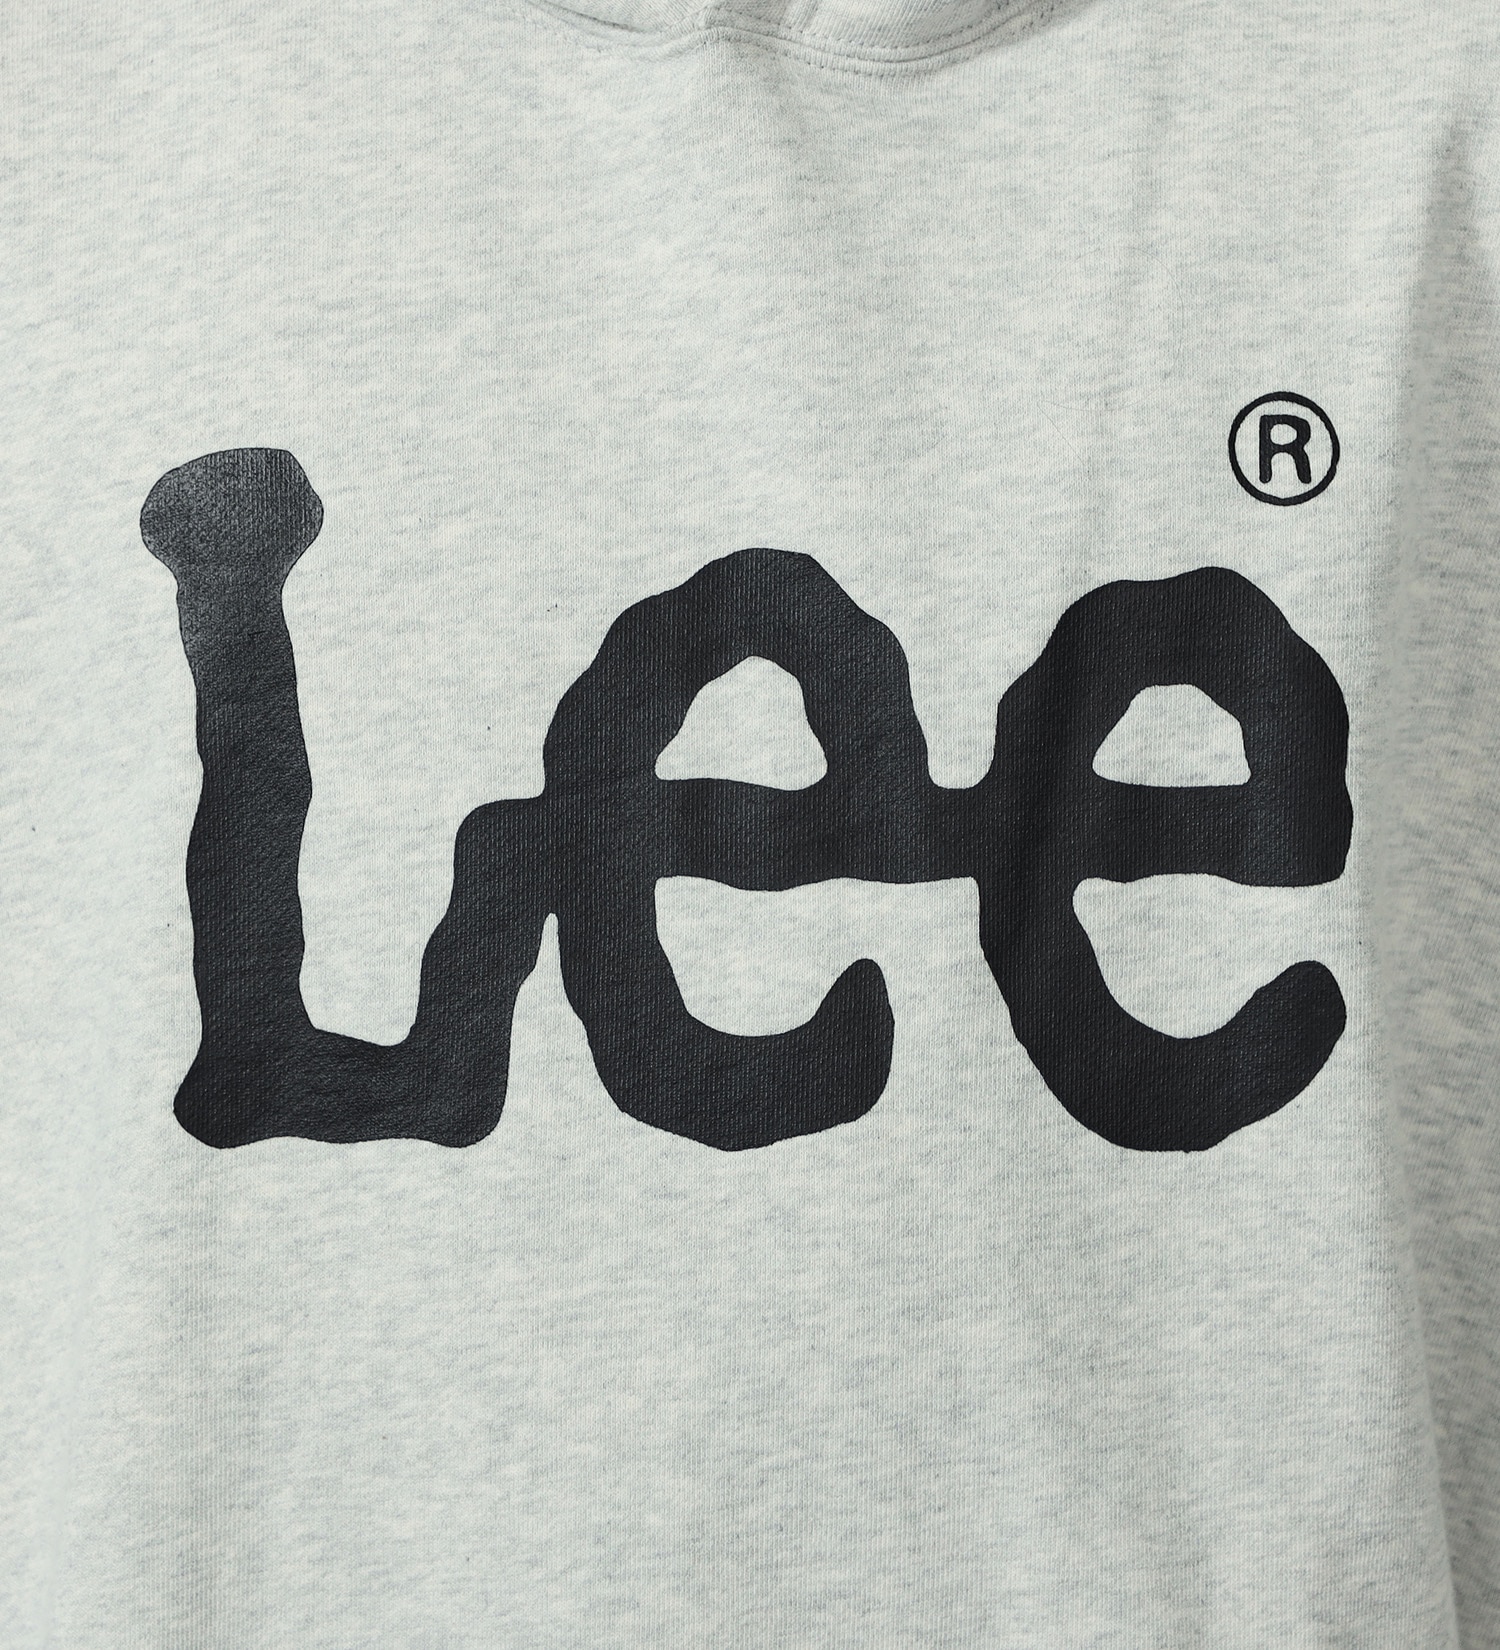 Lee(リー)のSUPER SIZED フーディースエット|トップス/パーカー/メンズ|グレー